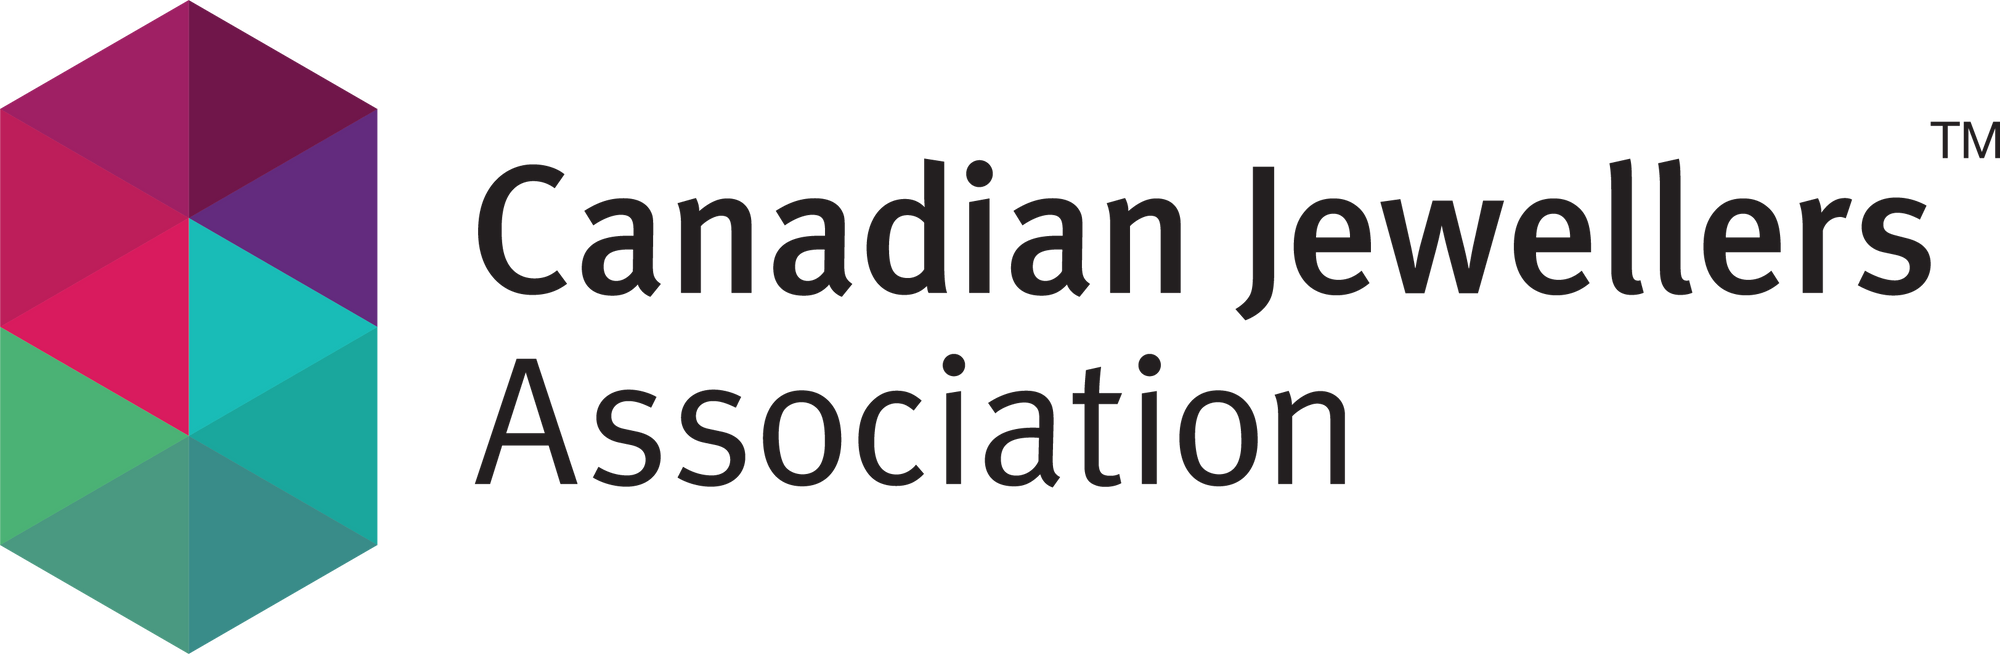 Canadian Jewellers Association logo